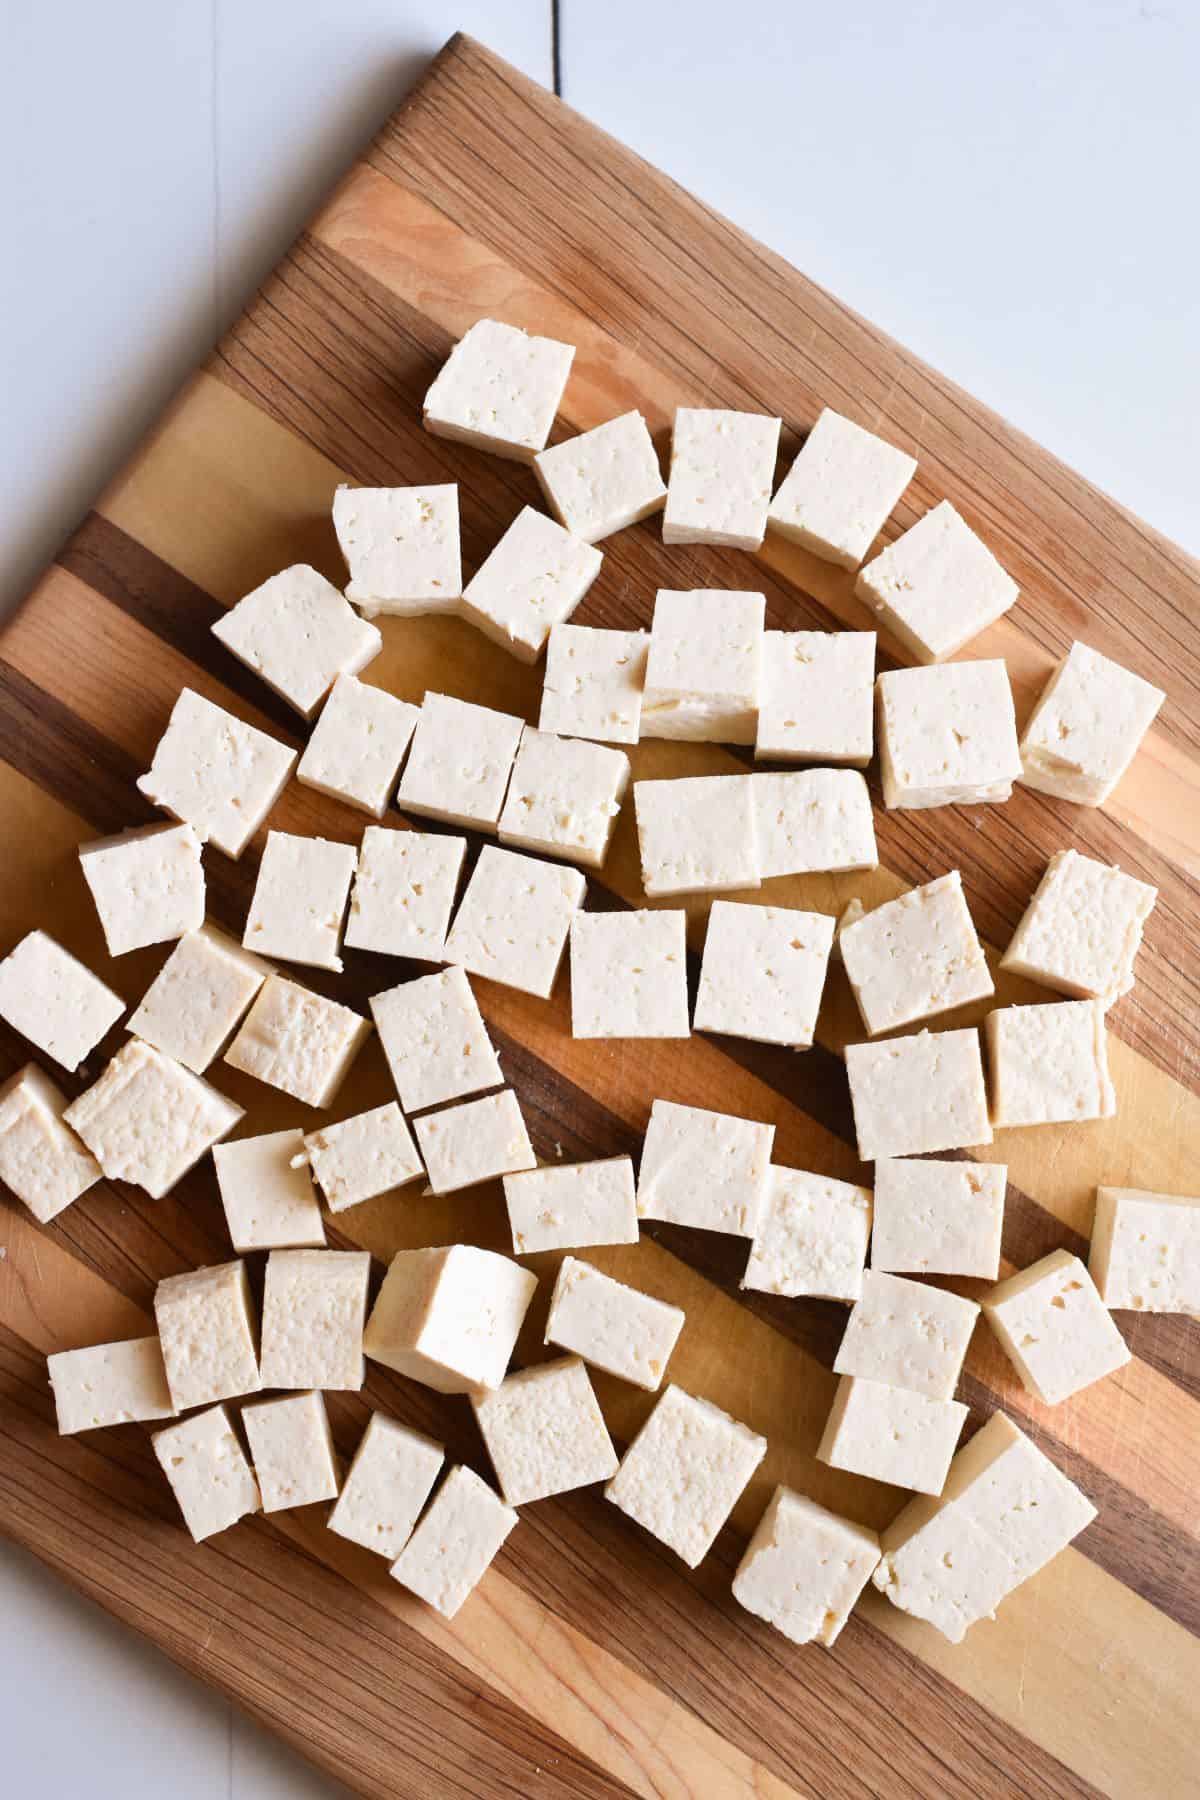 Tofu cut into cubes on a cutting board.